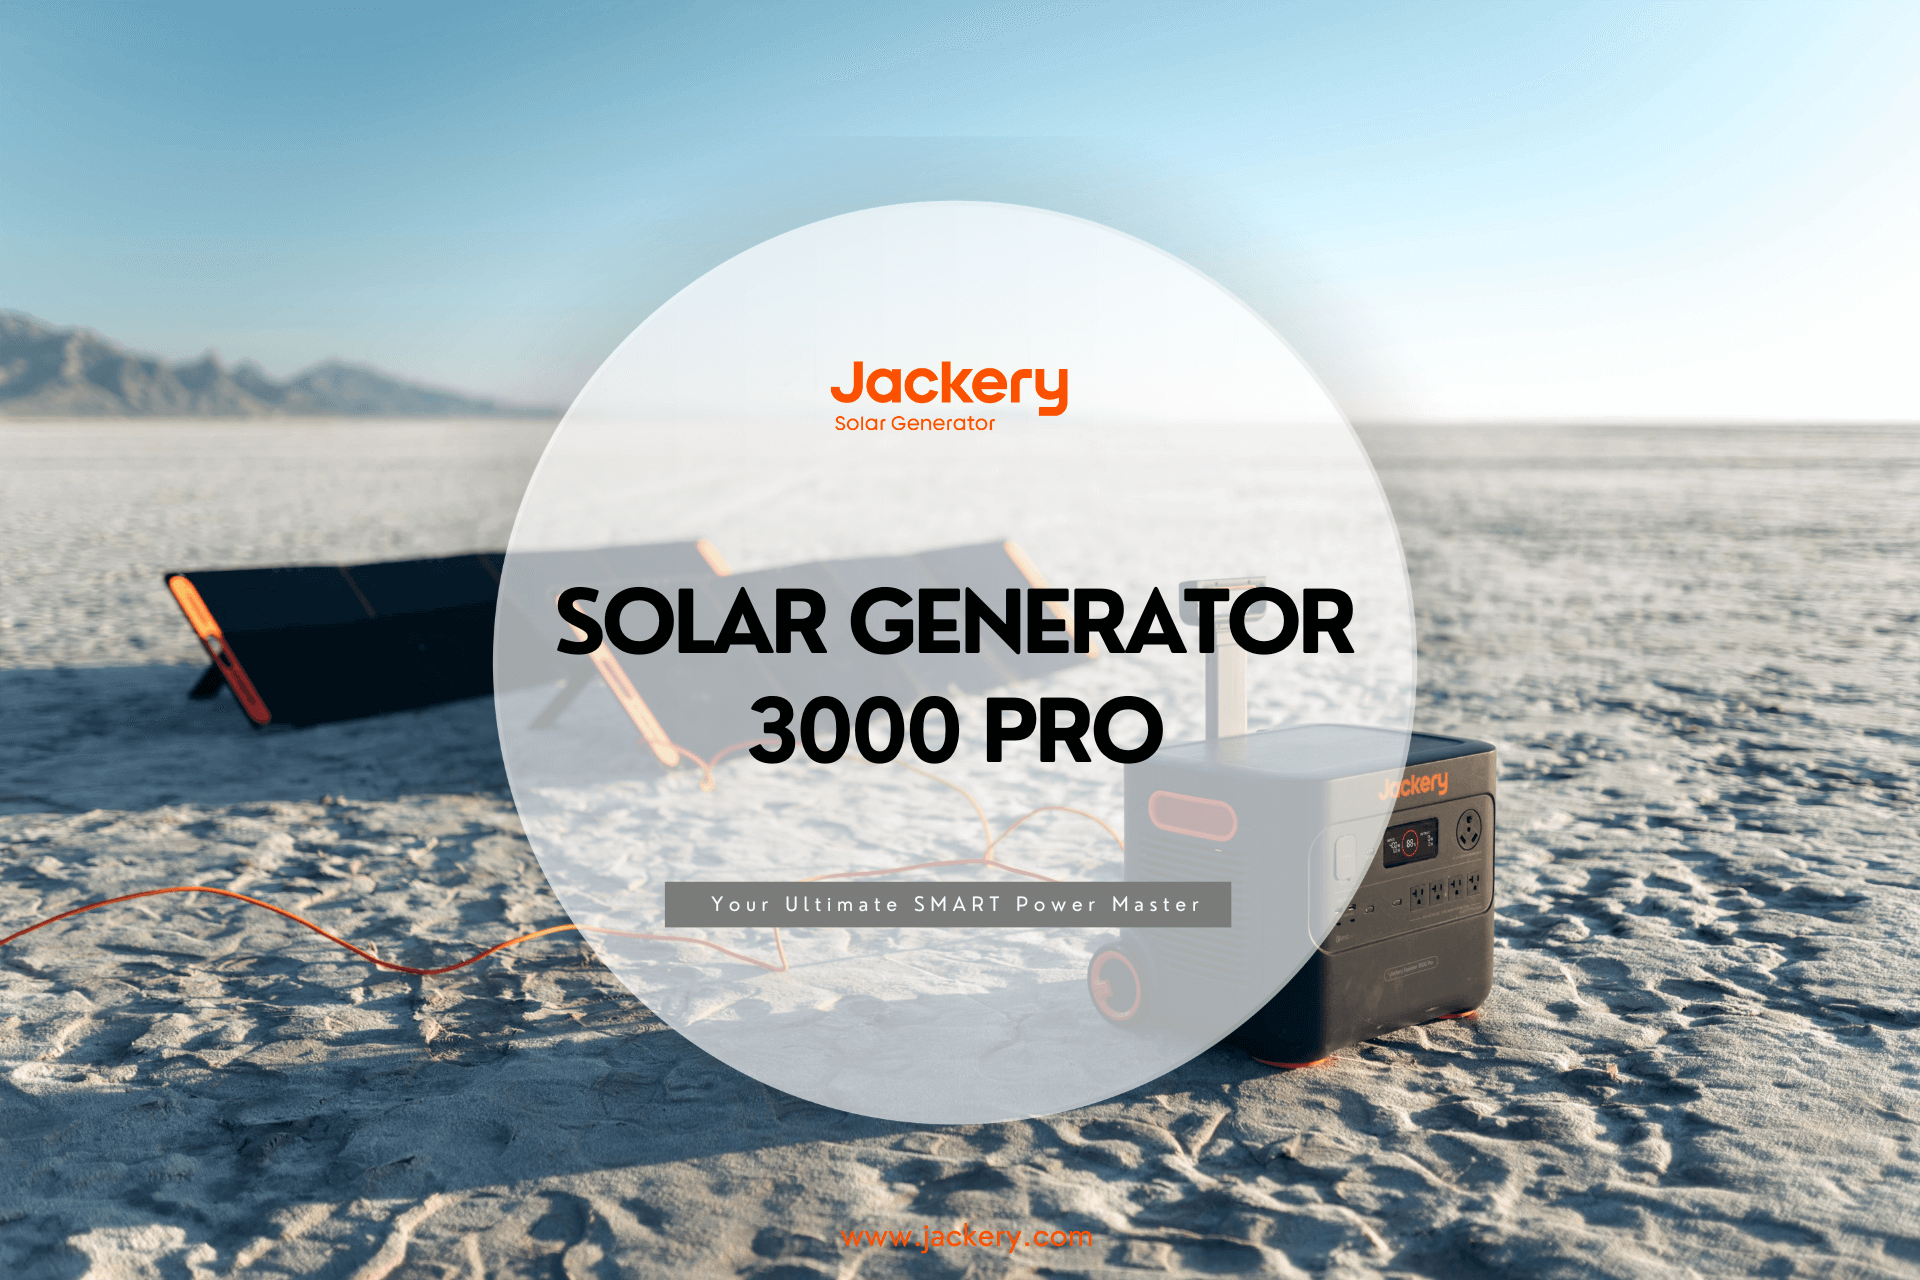 Jackery solar generator 3000 pro review